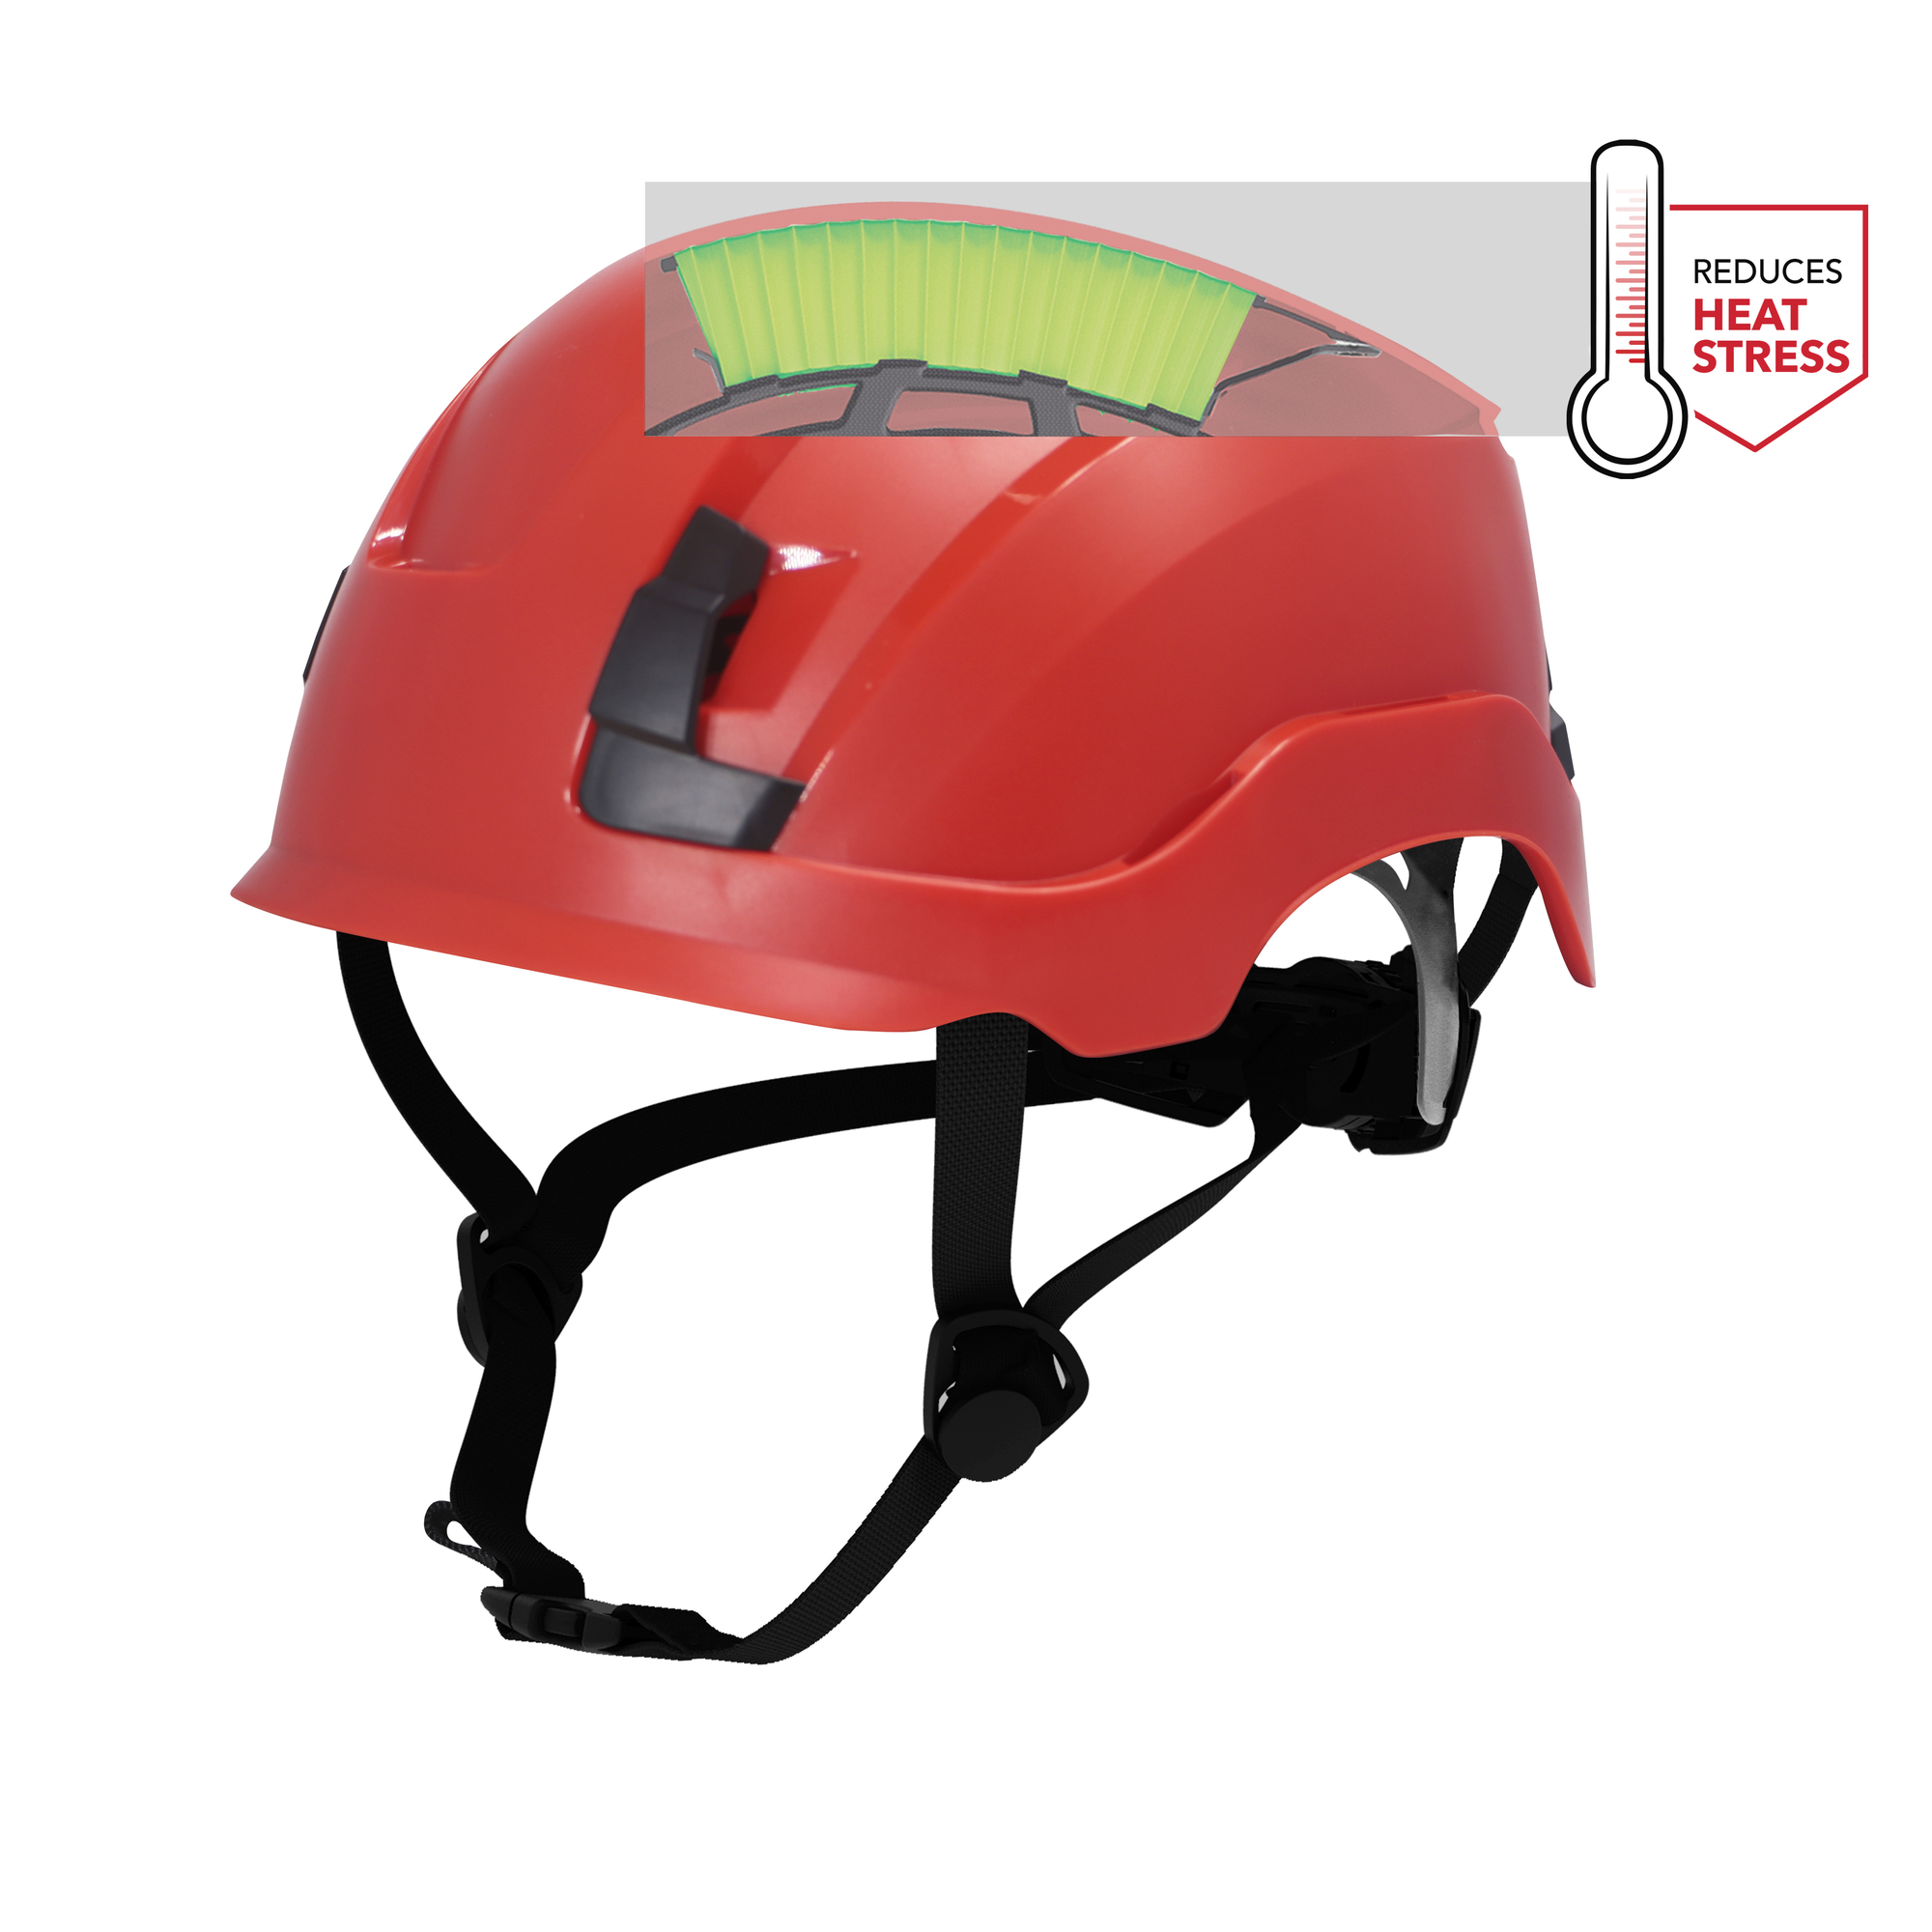 General Electric, Low-Profile Red GH400 Safety Helmet Vented, Hard Hat Style Helmet, Hat Size Adjustable, Color Red, Model GH400R